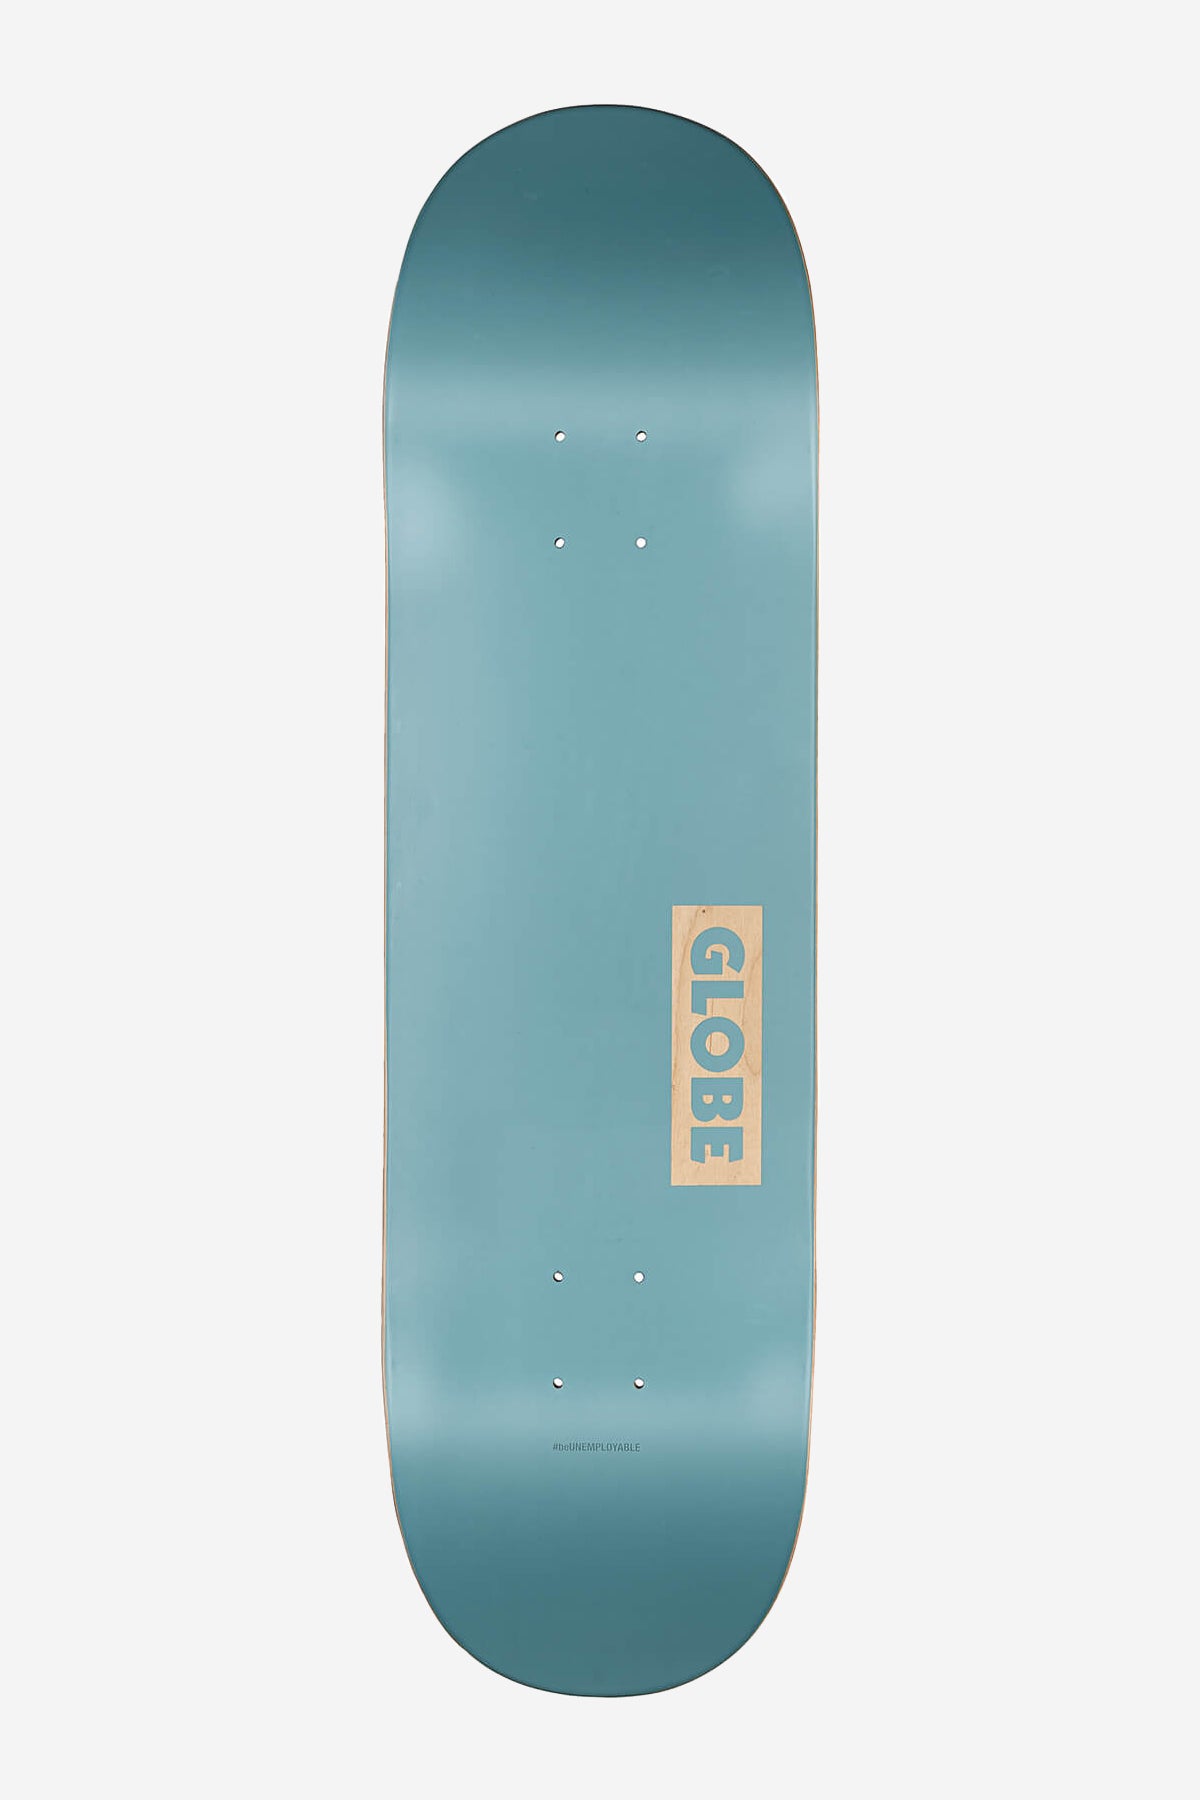 Goed gevoel fax Okkernoot Goodstock - Steel Blue - 8.75" Skateboard Deck – Globe Europe